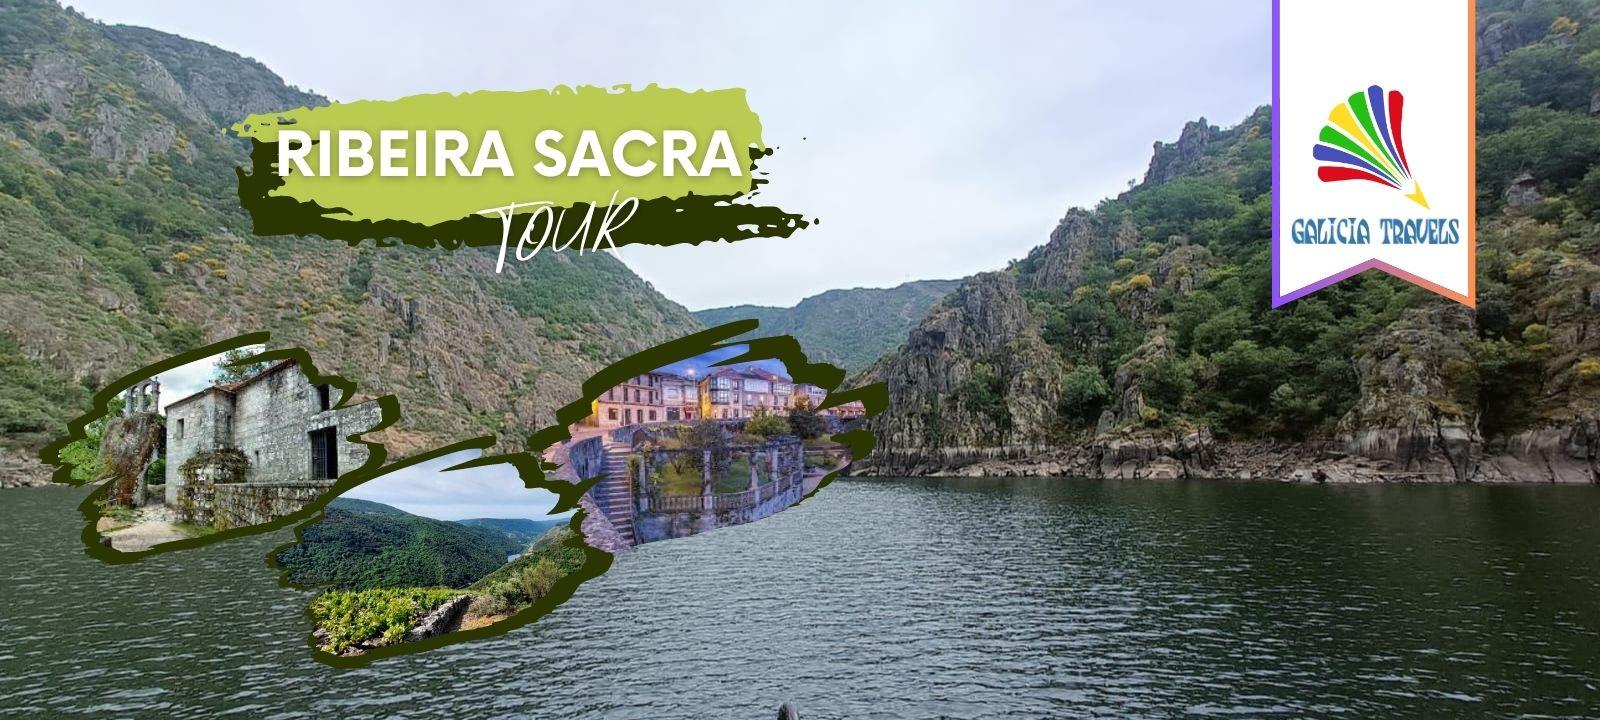 From Santiago: Ribeira Sacra Tour & Boat Trip